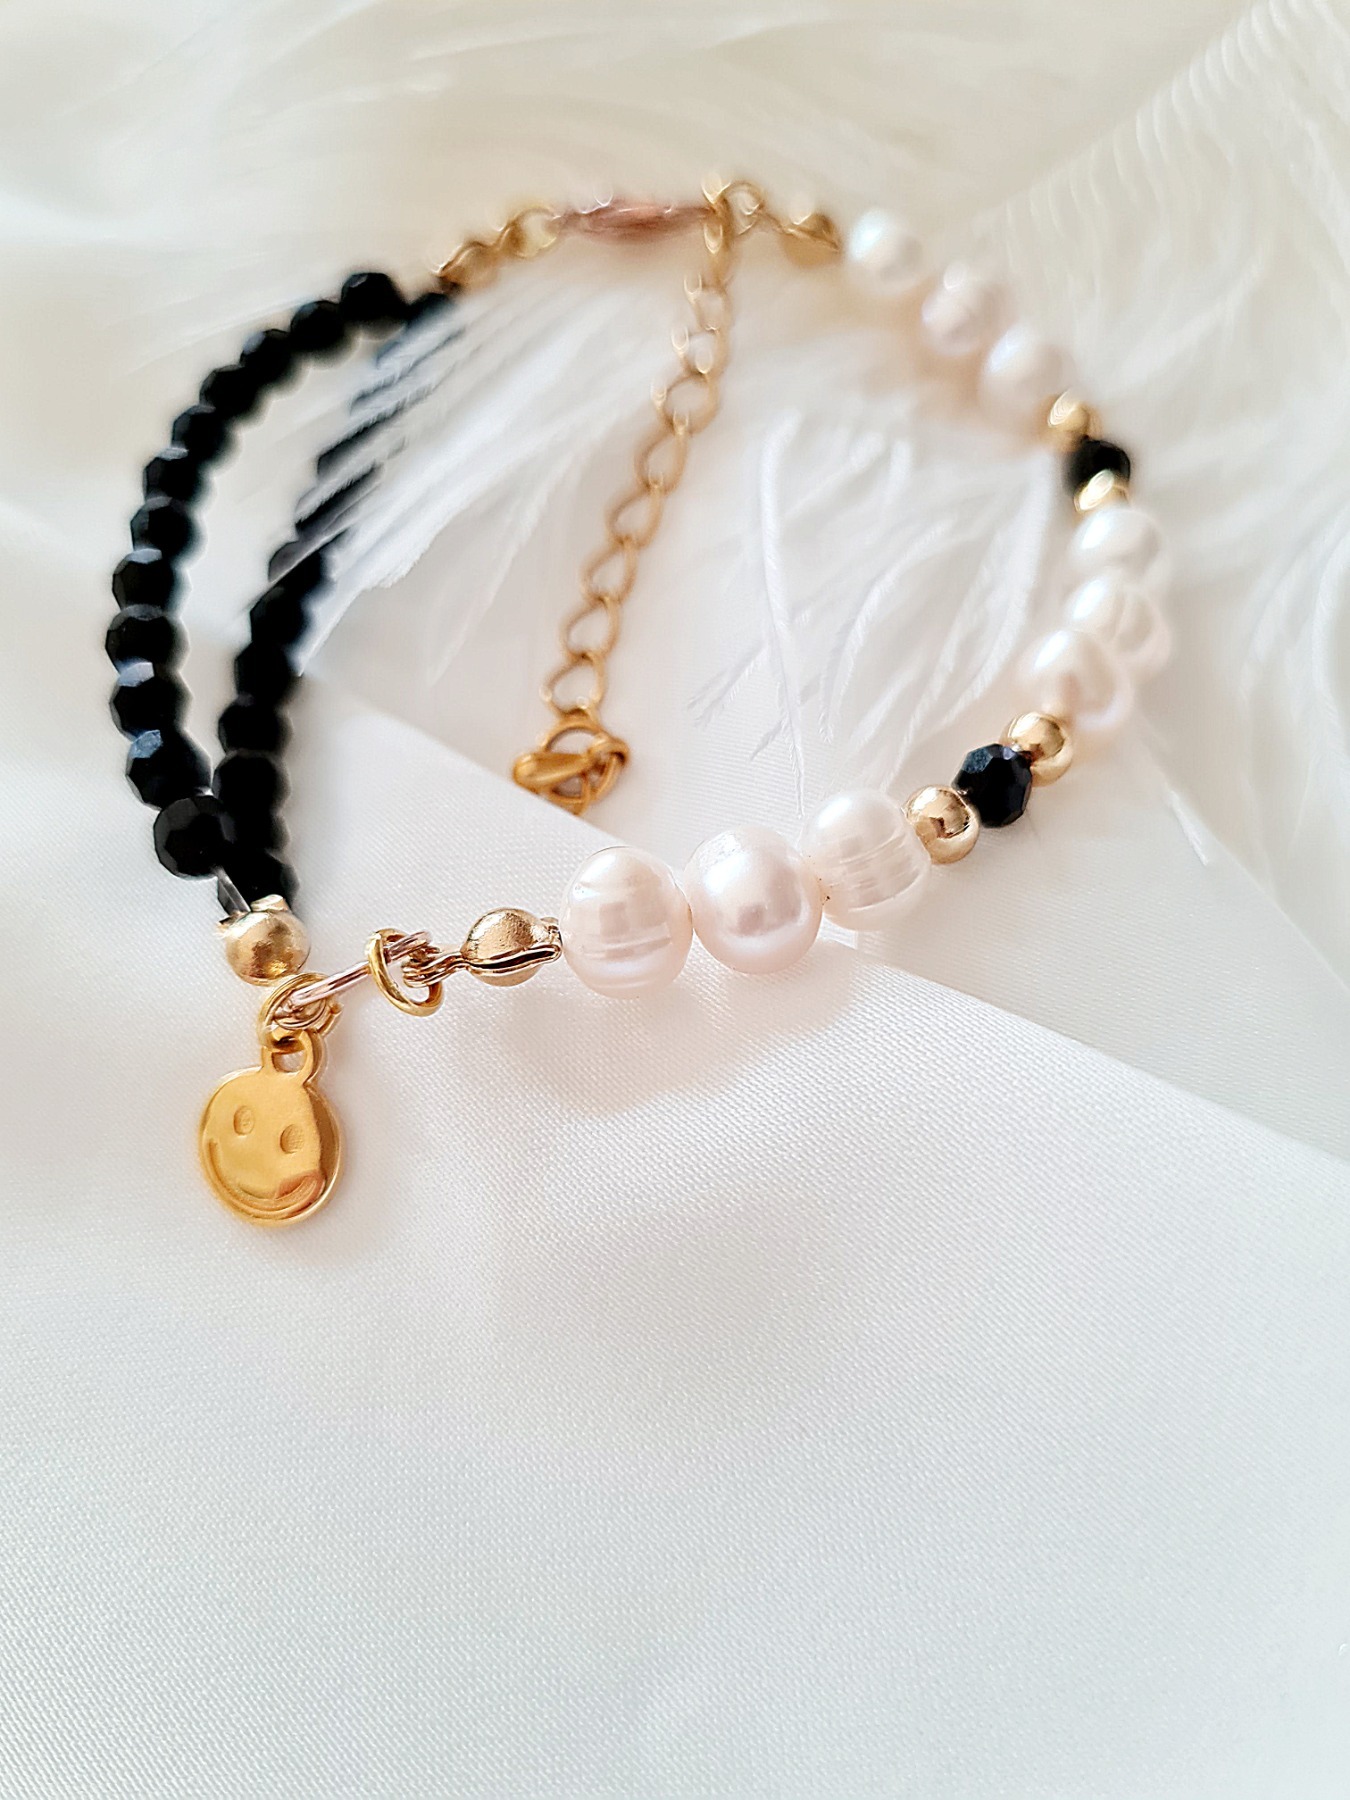 Perfektes Accessoire Perlen Armband Schwarz-Weiß Perlen Süßwasser Zucht Perlen 4